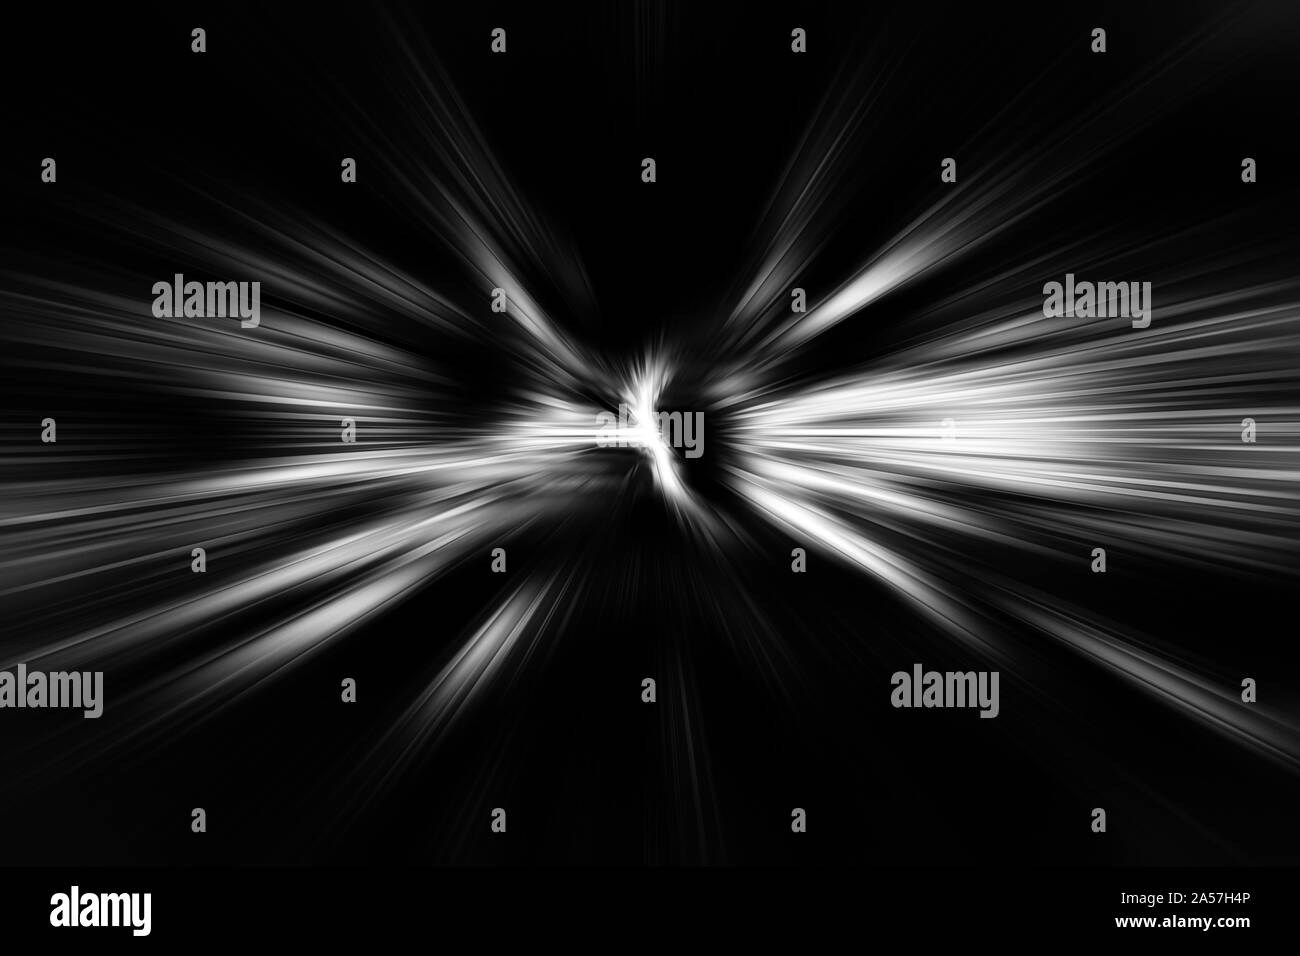 Light Burst Black and White Stock Photos & Images - Alamy